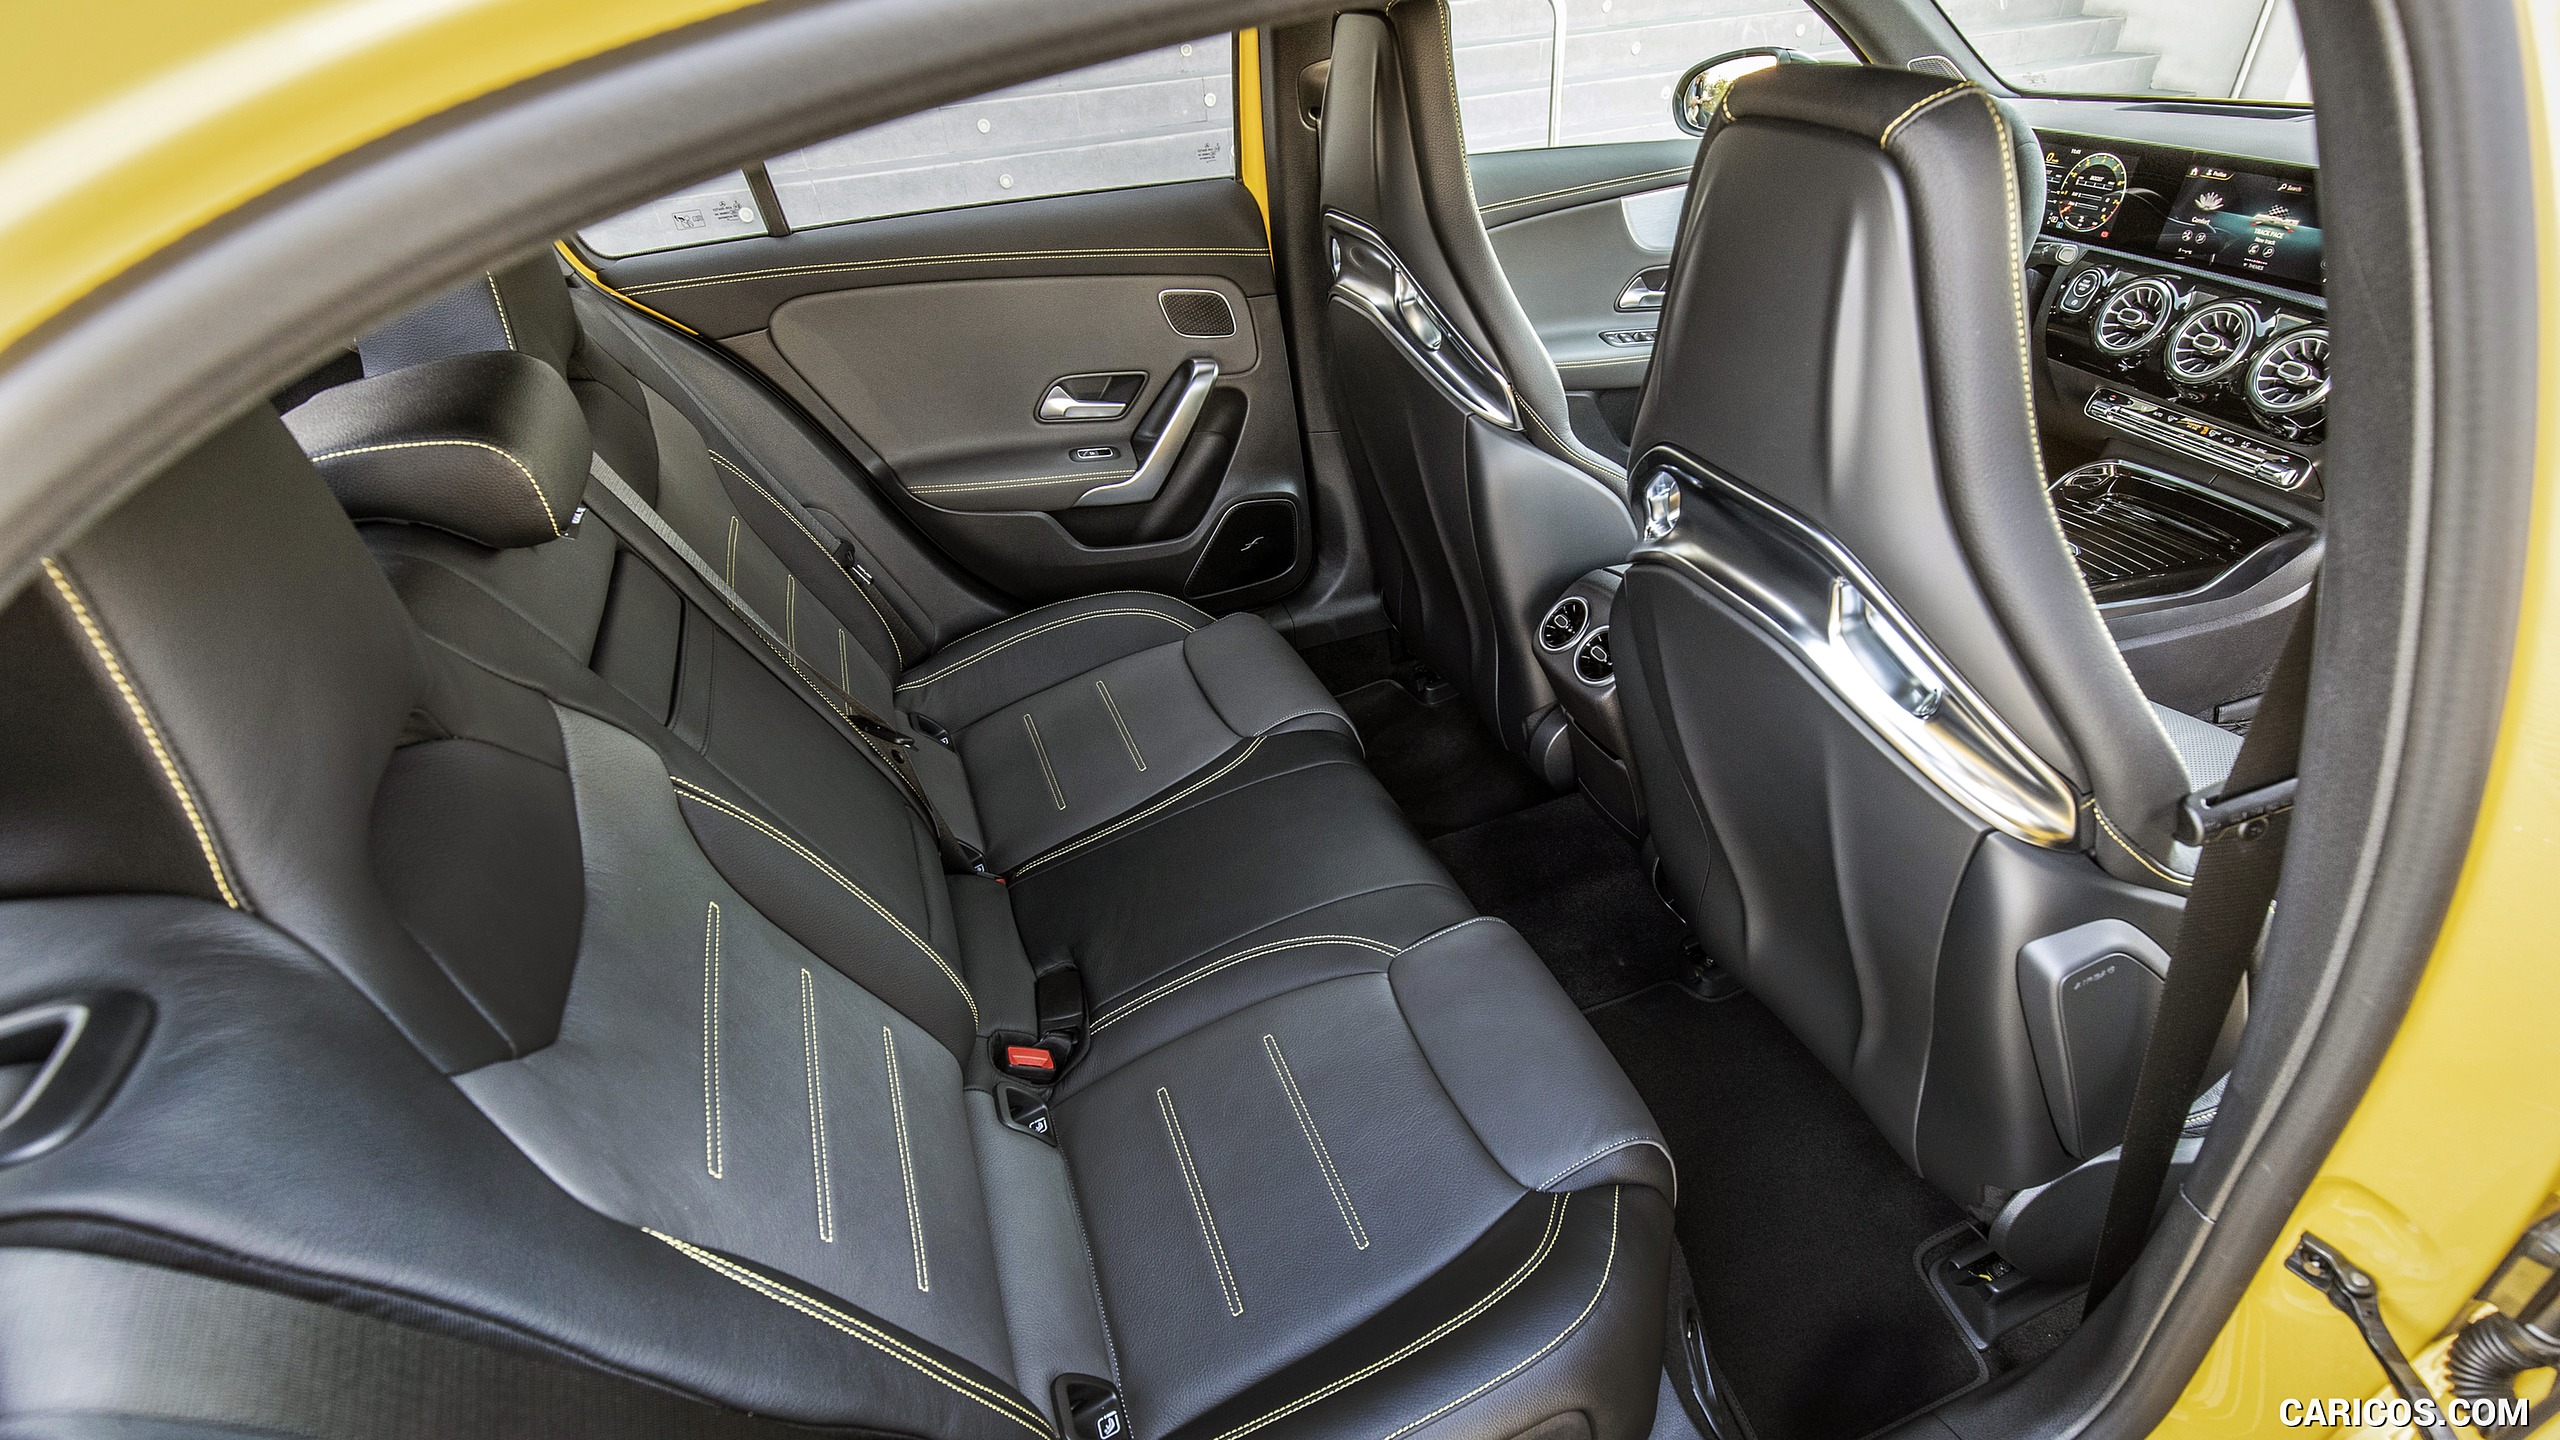 2020 Mercedes-AMG A 45 S 4MATIC+ - Interior, Rear Seats, #113 of 188